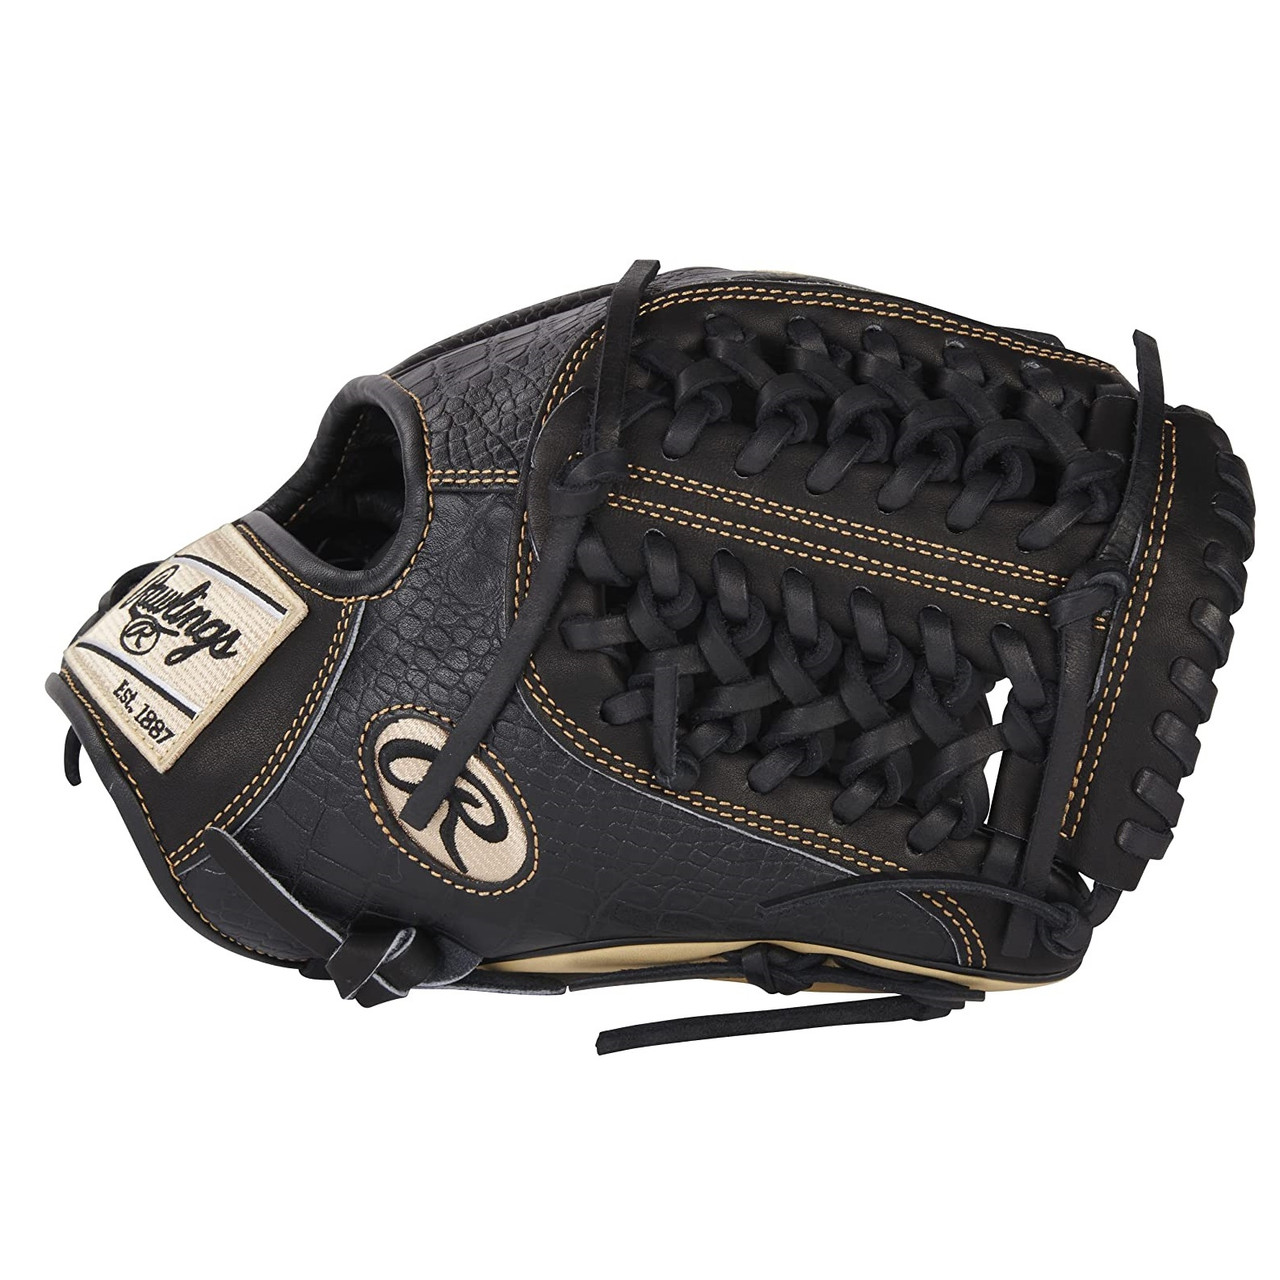 Rawlings Heart of The Hide Baseball Glove R2G Narrow Fit 11.75 